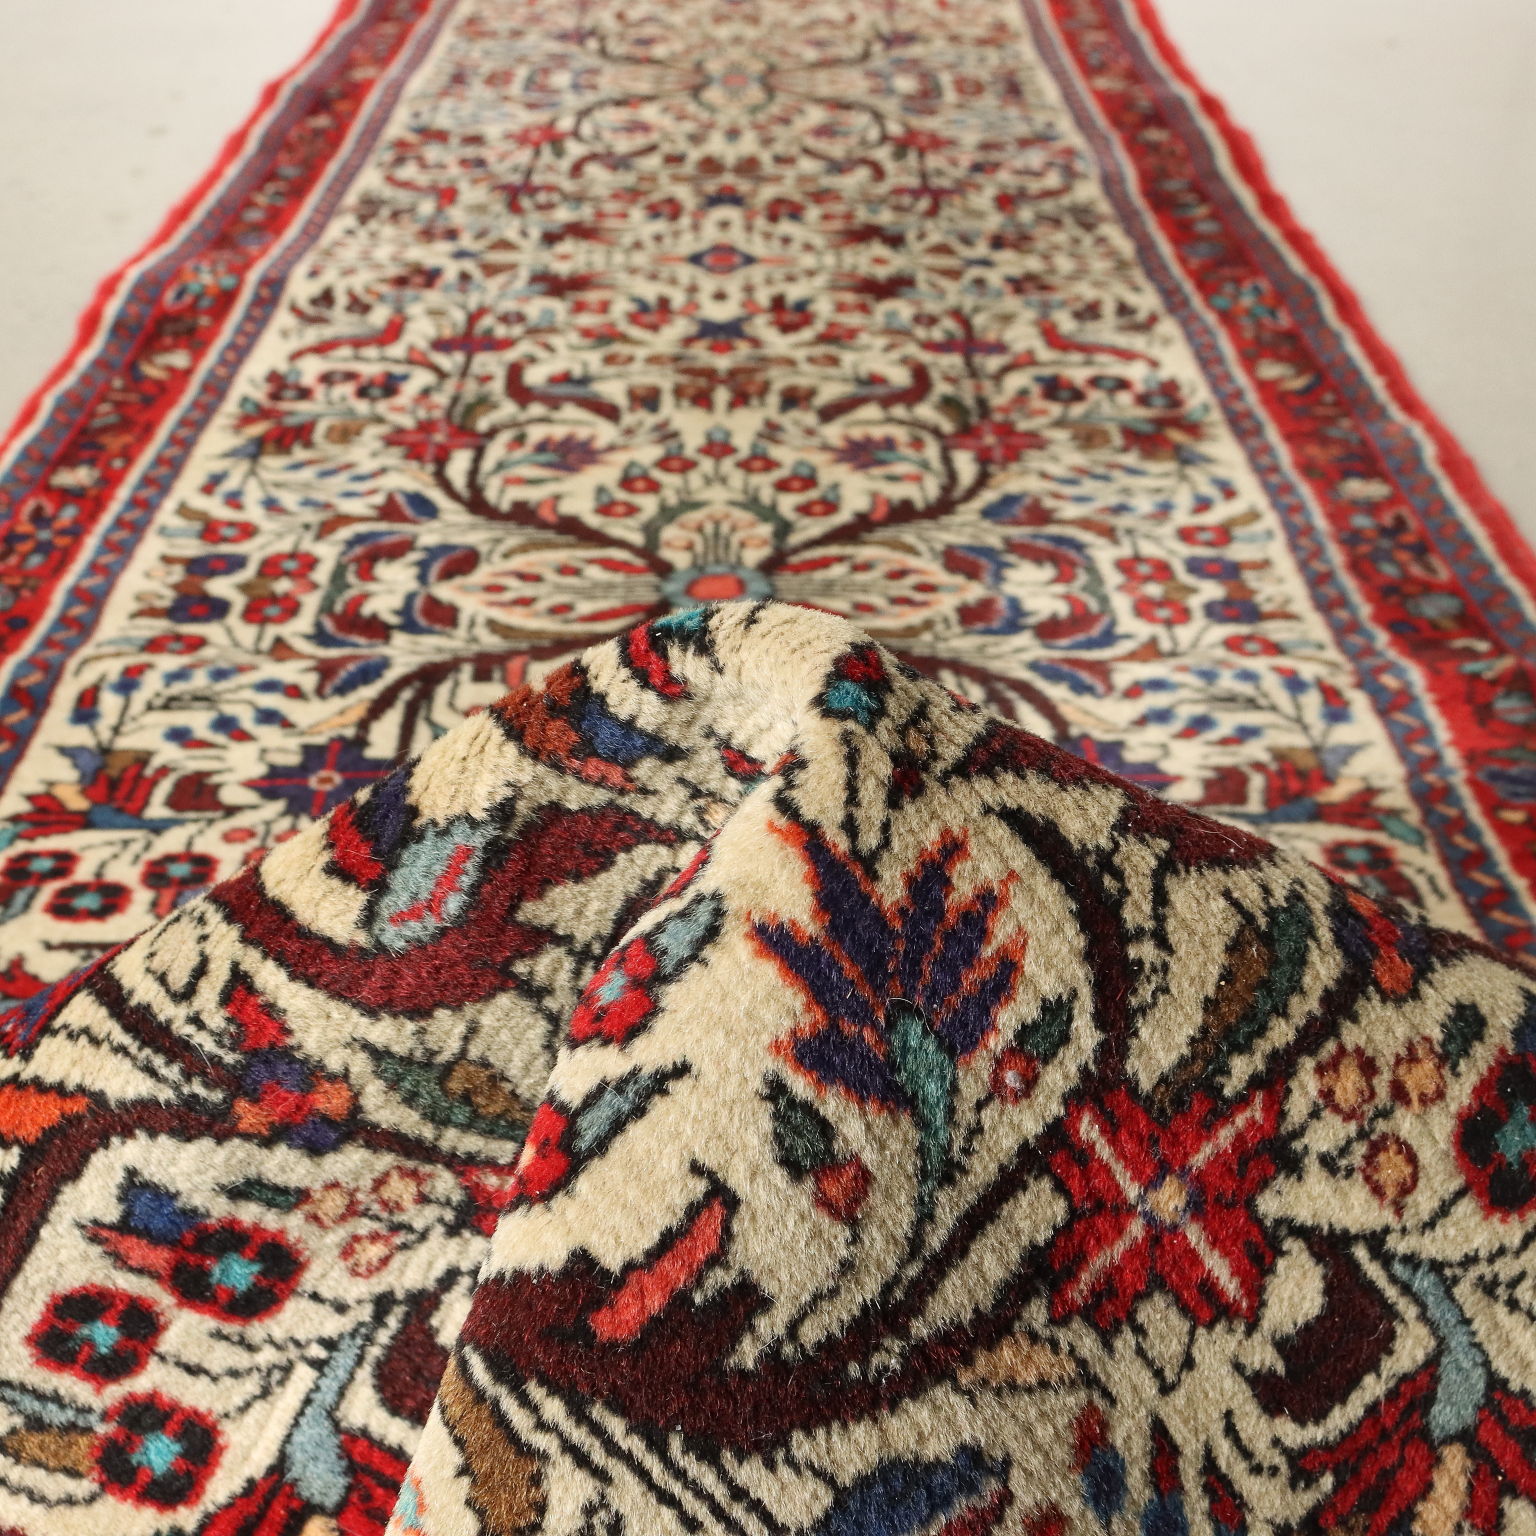 Tapis Floor 136 Isfahan rouge 160 x 230 cm